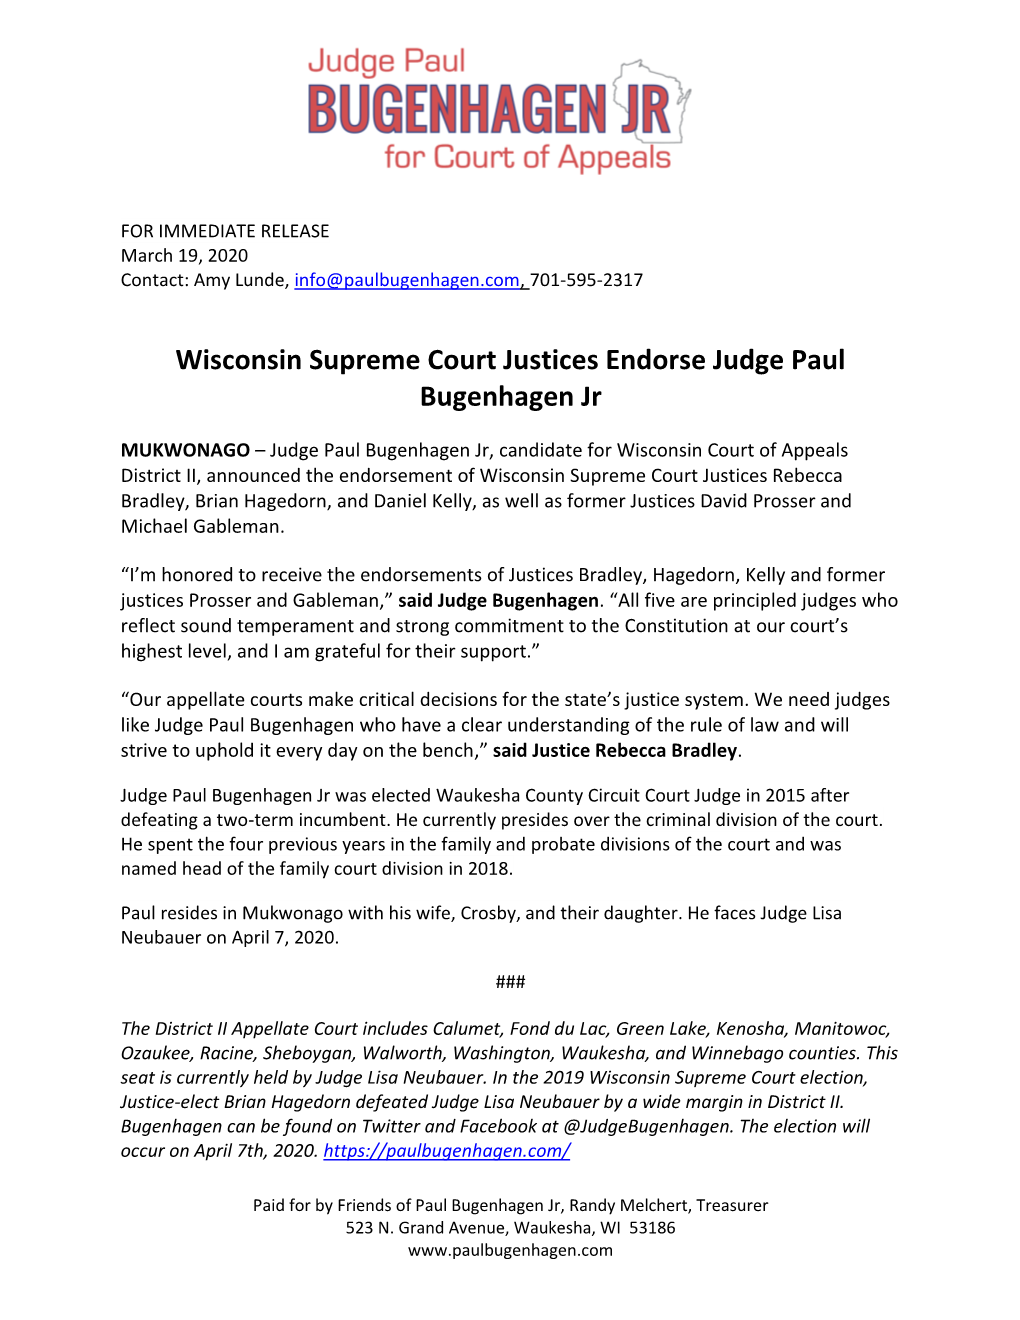 Wisconsin Supreme Court Justices Endorse Judge Paul Bugenhagen Jr